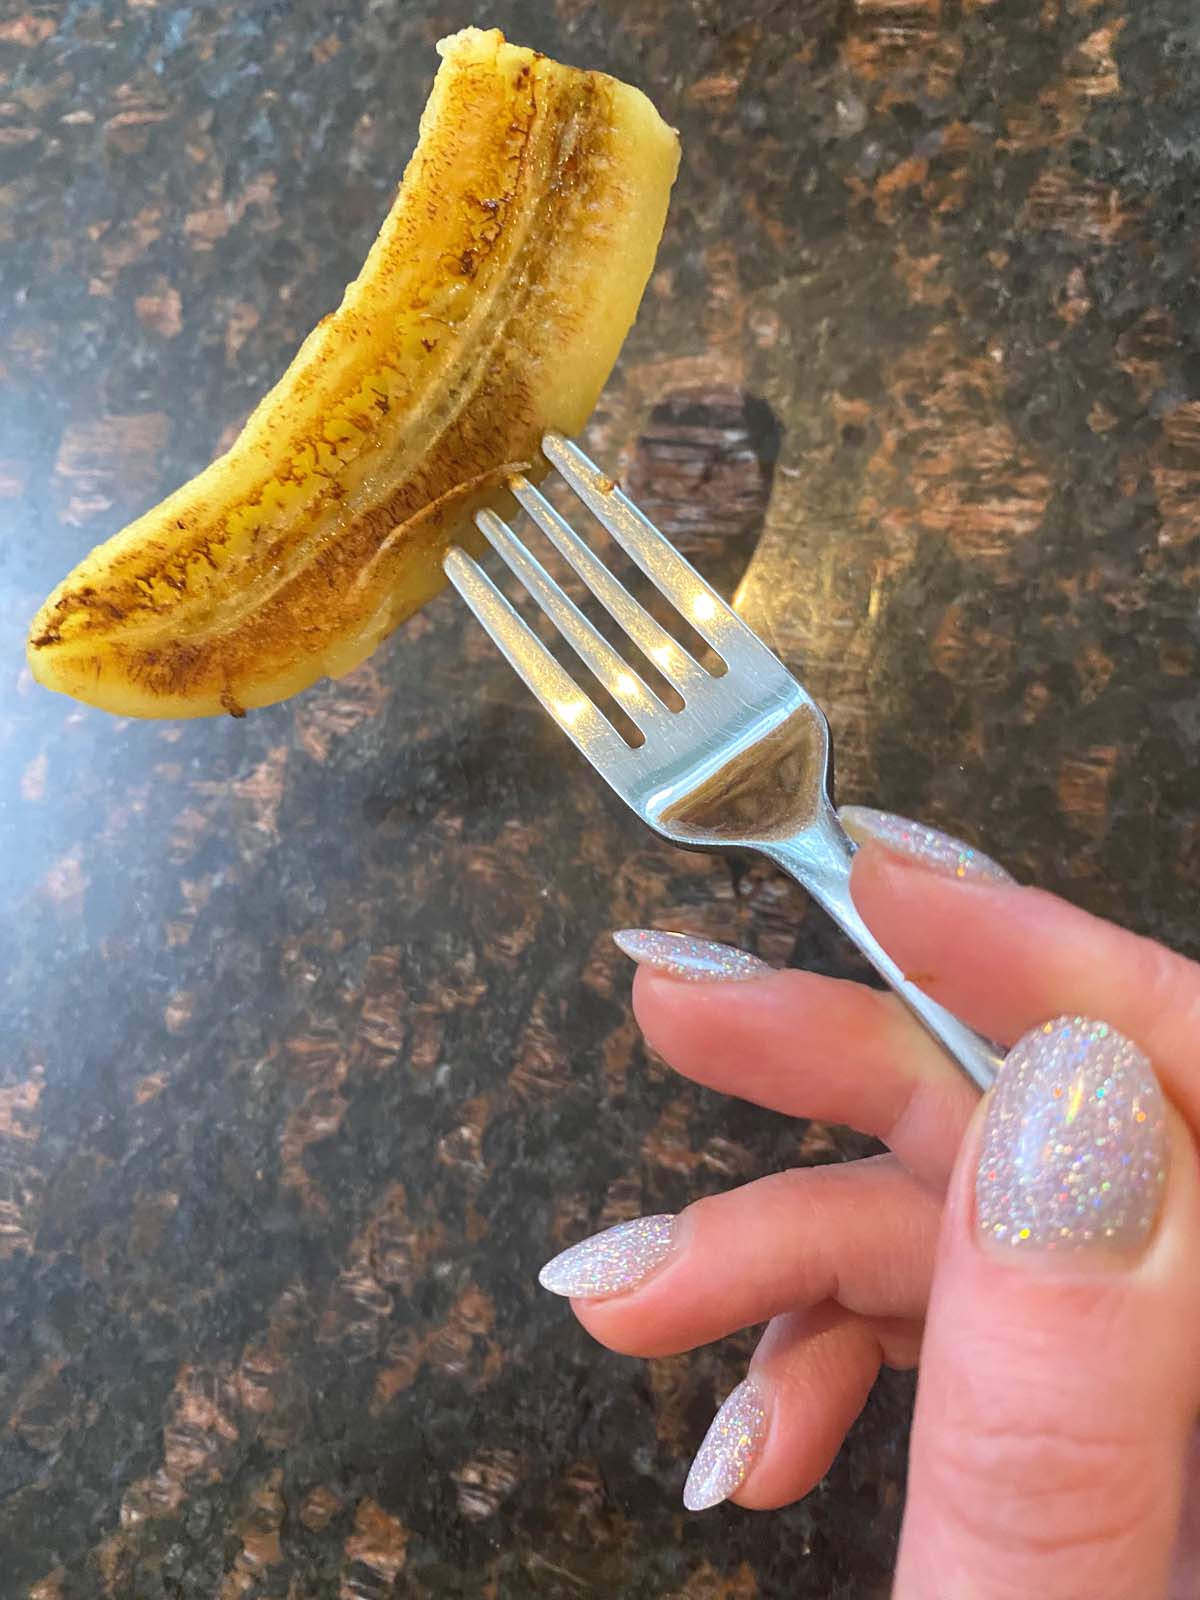 Fried banana on a fork.